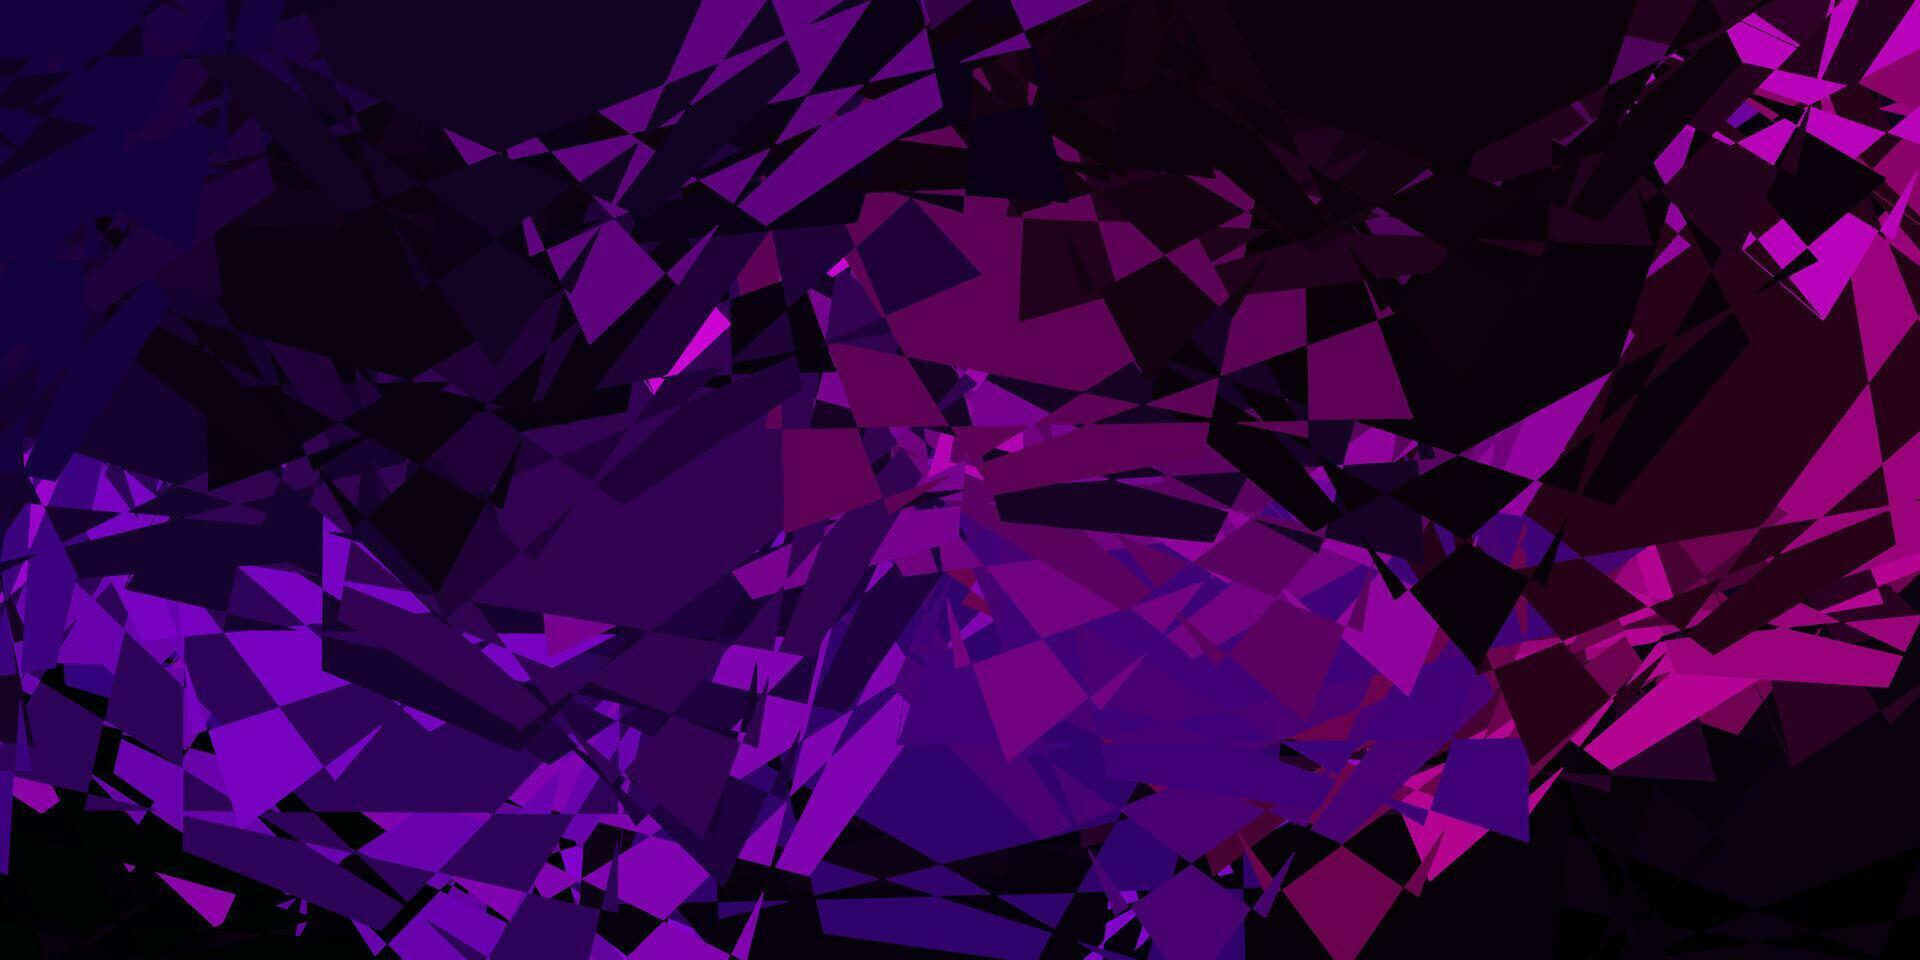 textura de vector púrpura oscuro con triángulos al azar.